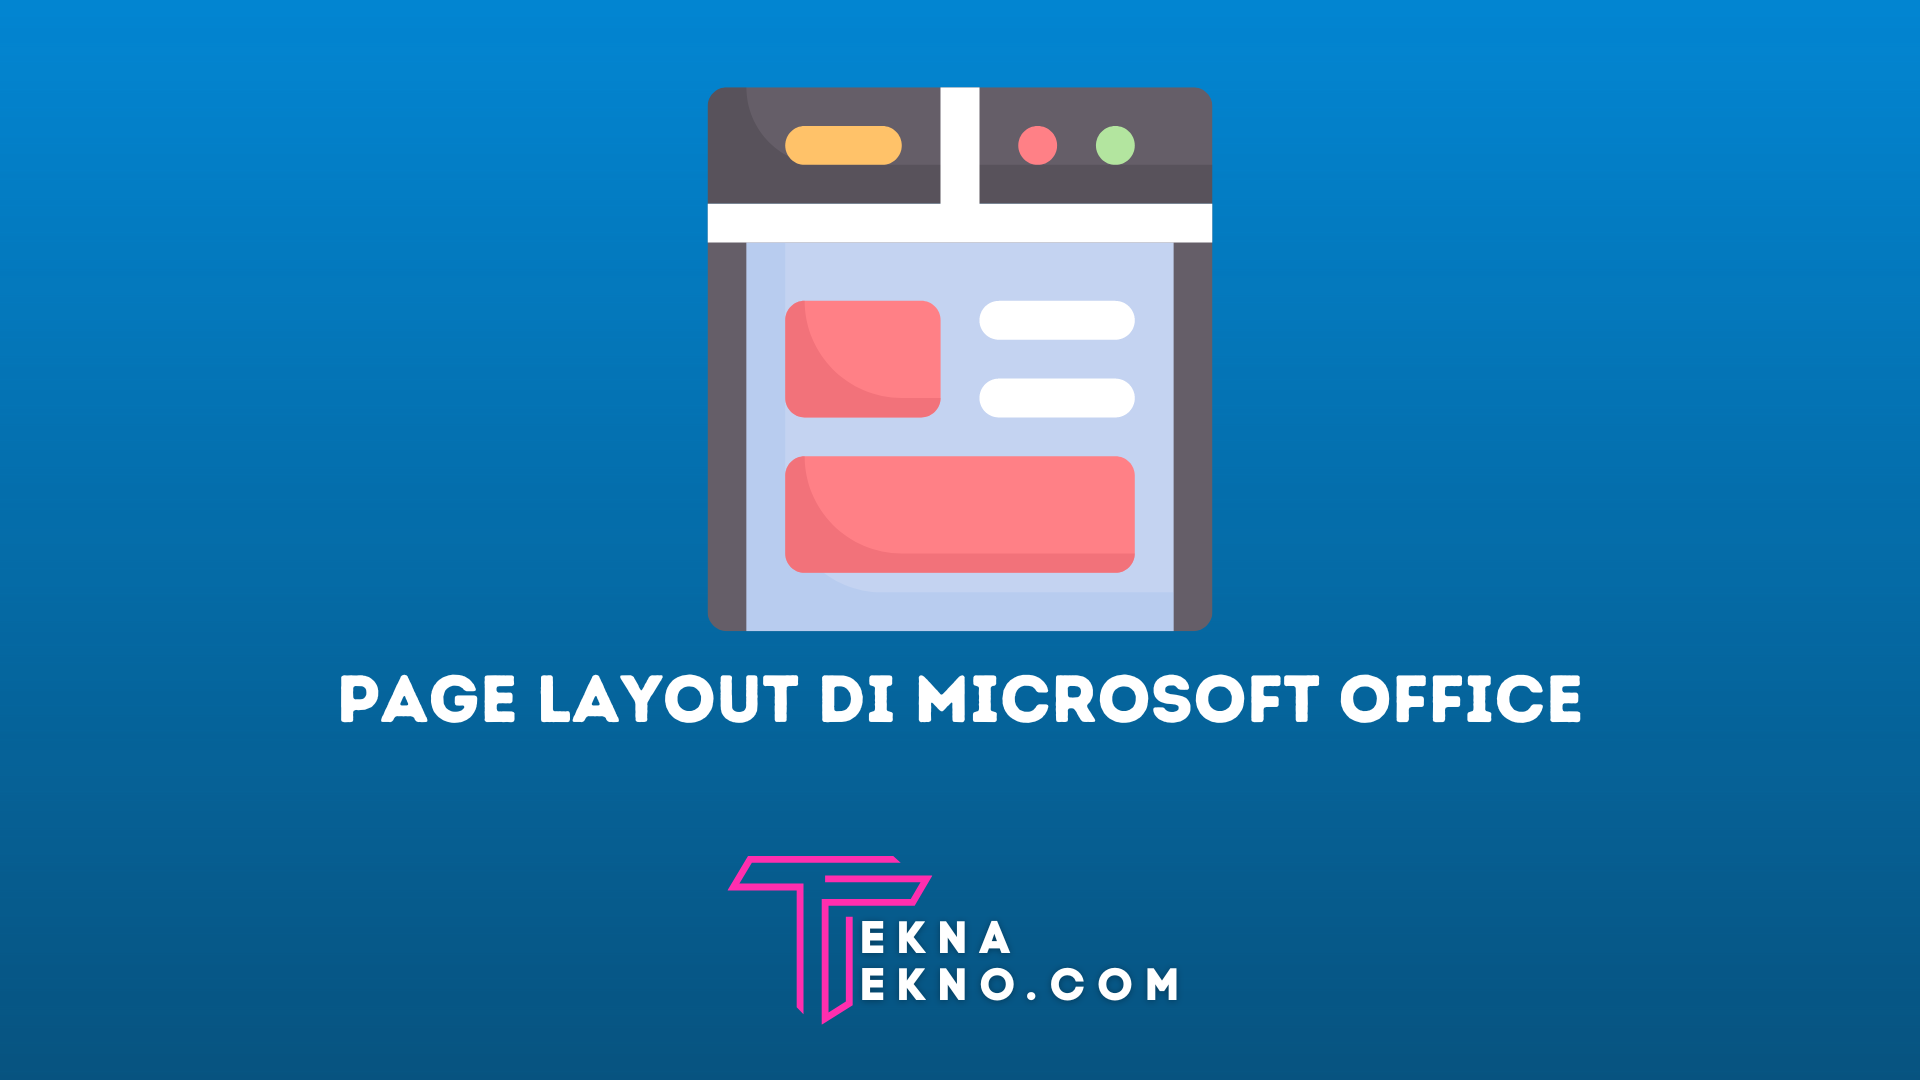 Pengertian Page Layout, Fungsi dan Cara Mengatur Page Layout Pada Microsoft Office